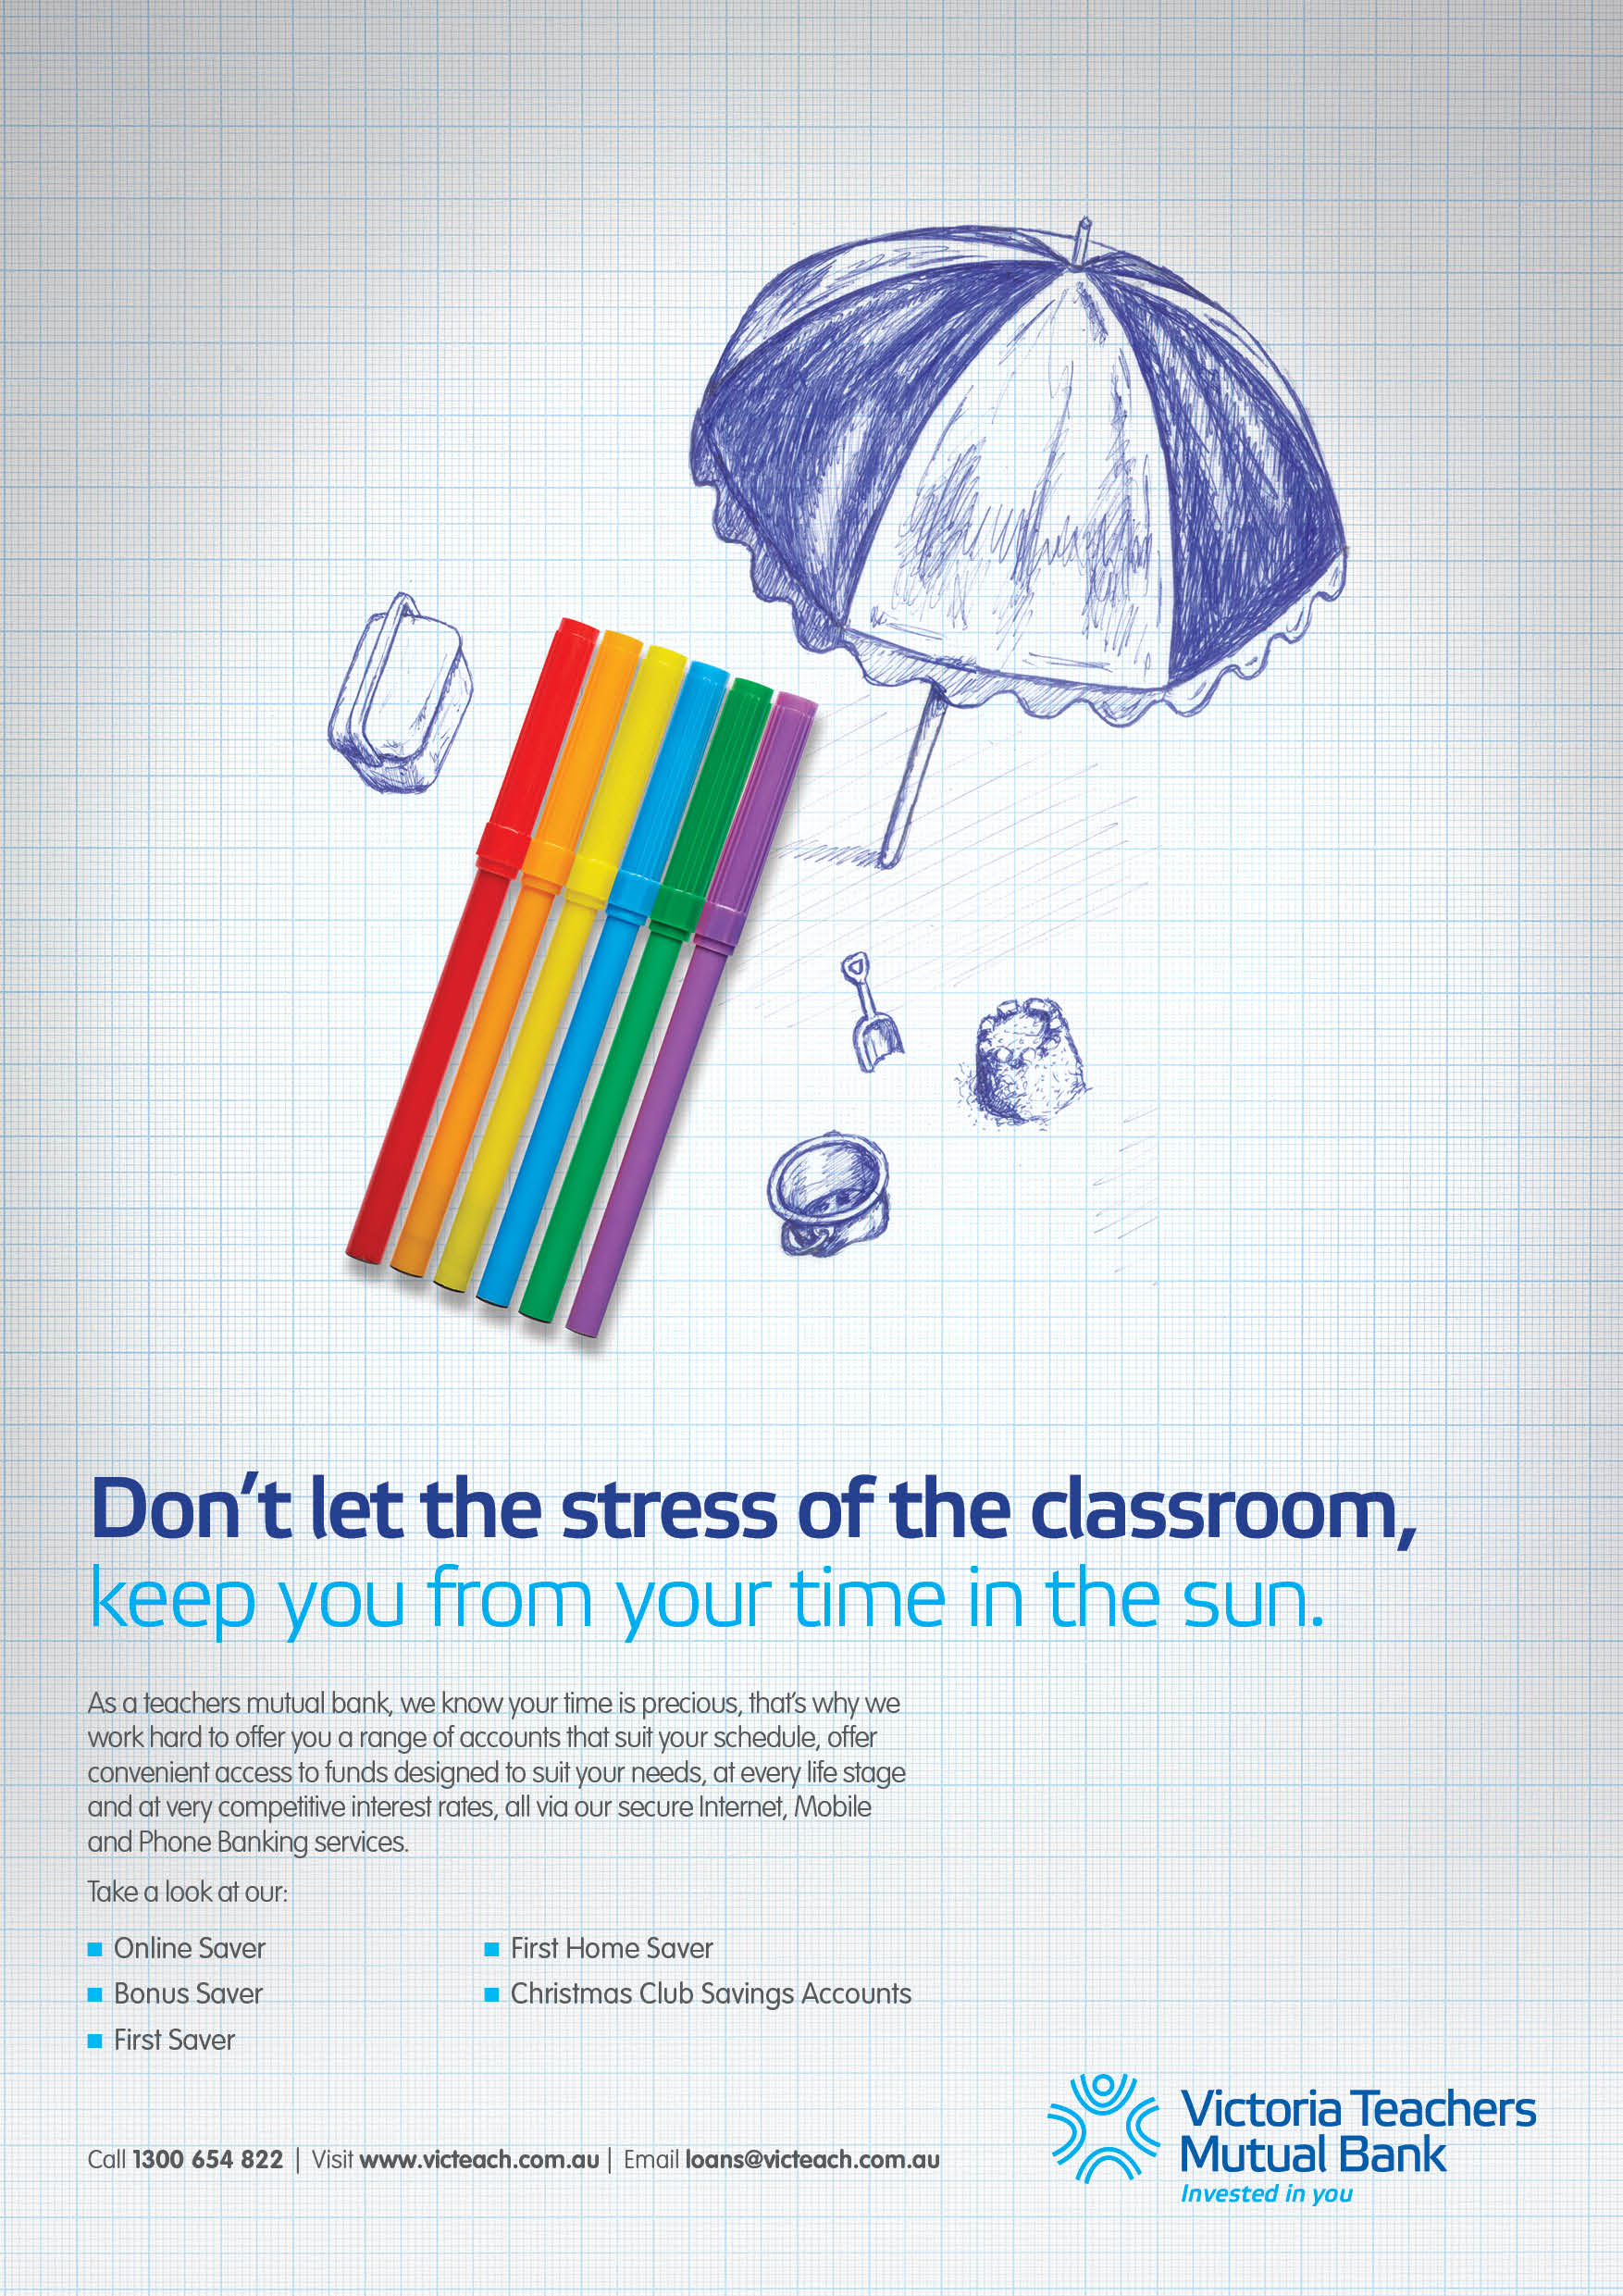 Print ad: Victoria Teachers Mutual Bank: Markers